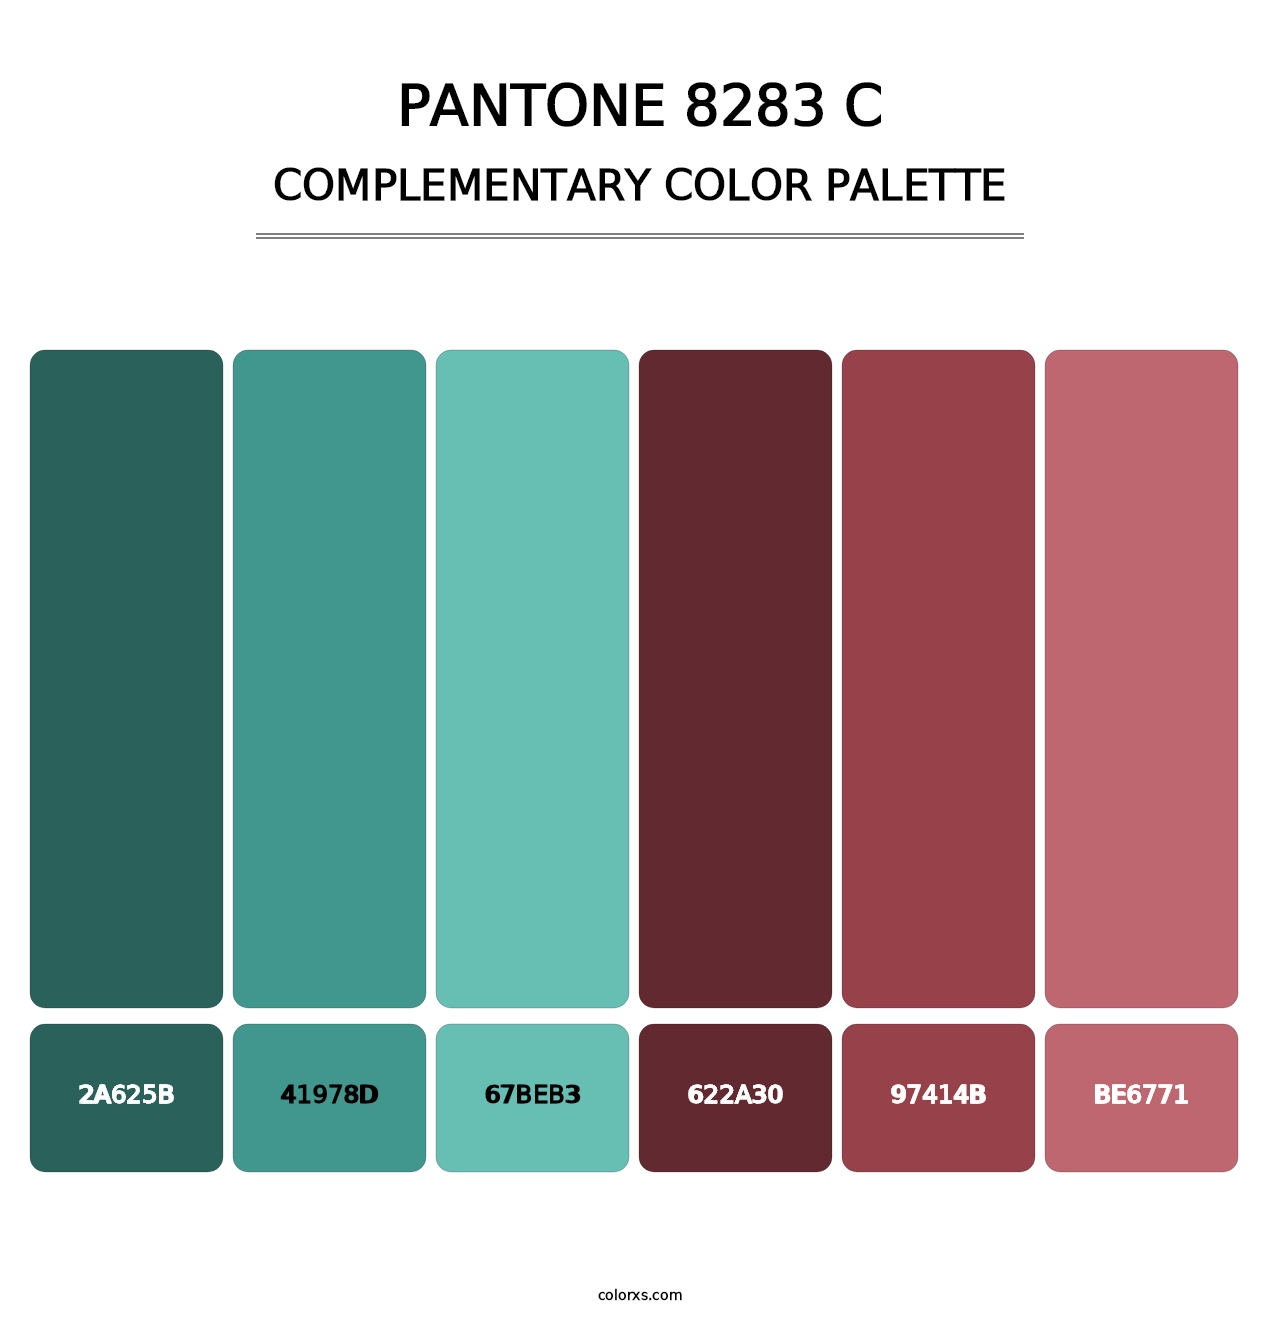 PANTONE 8283 C - Complementary Color Palette